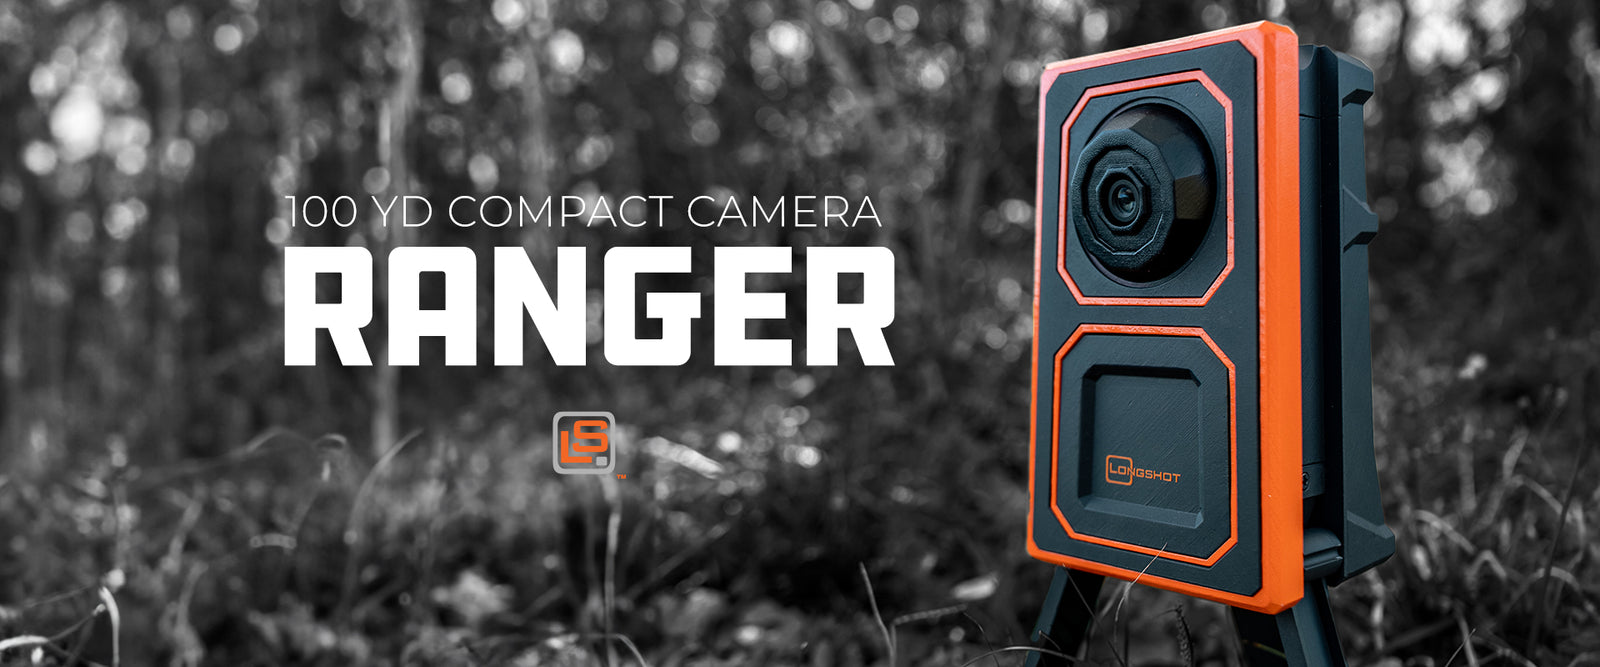 Longshot Target Camera - The Top Rated National Target Camera